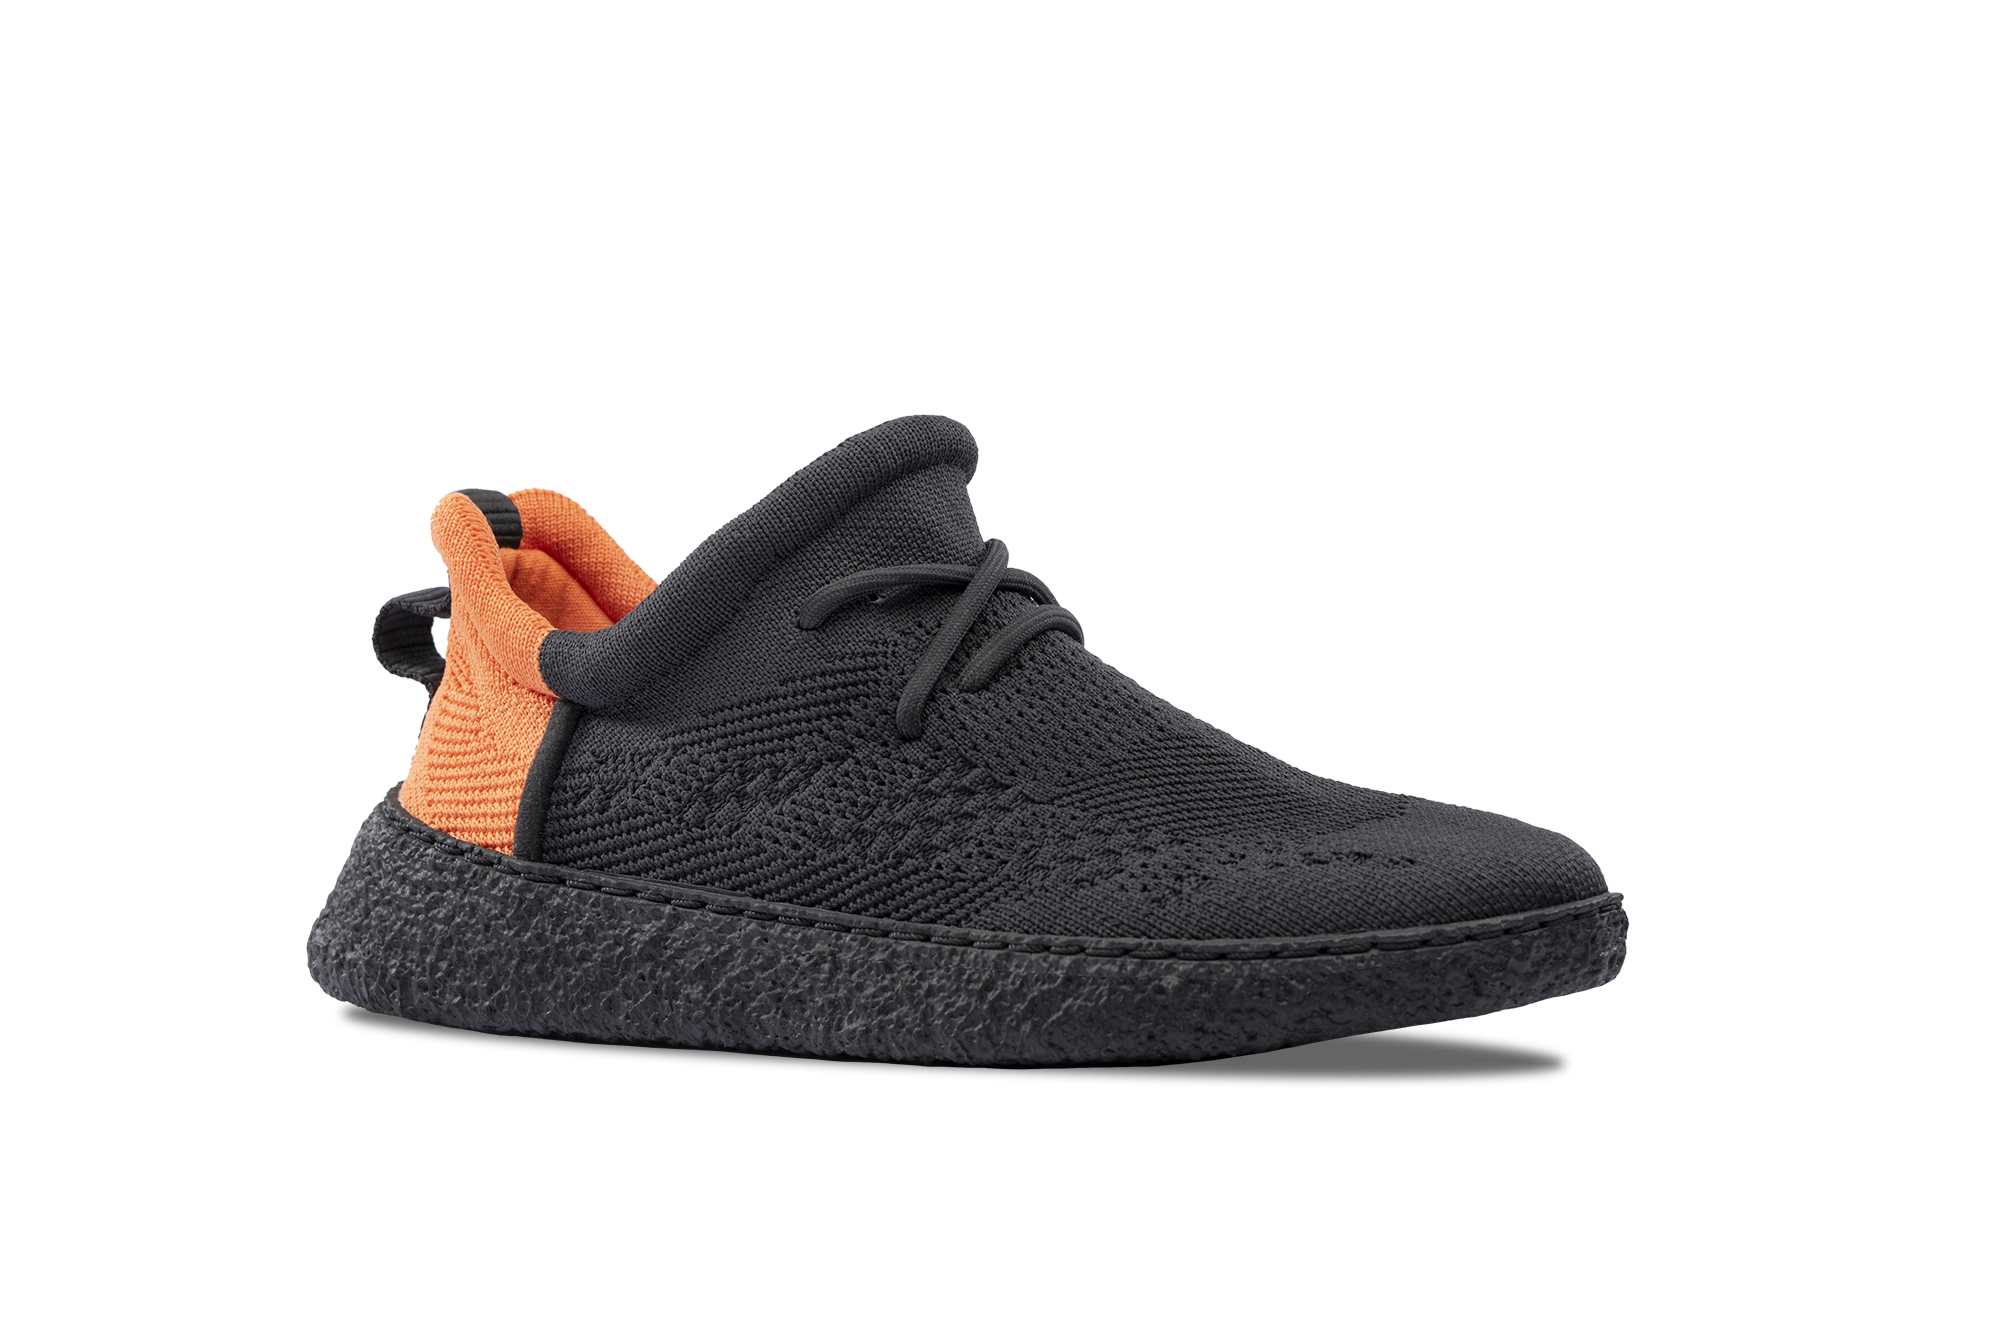 Baliston® by STARCK Smart Shoe | Black-Orange-Black